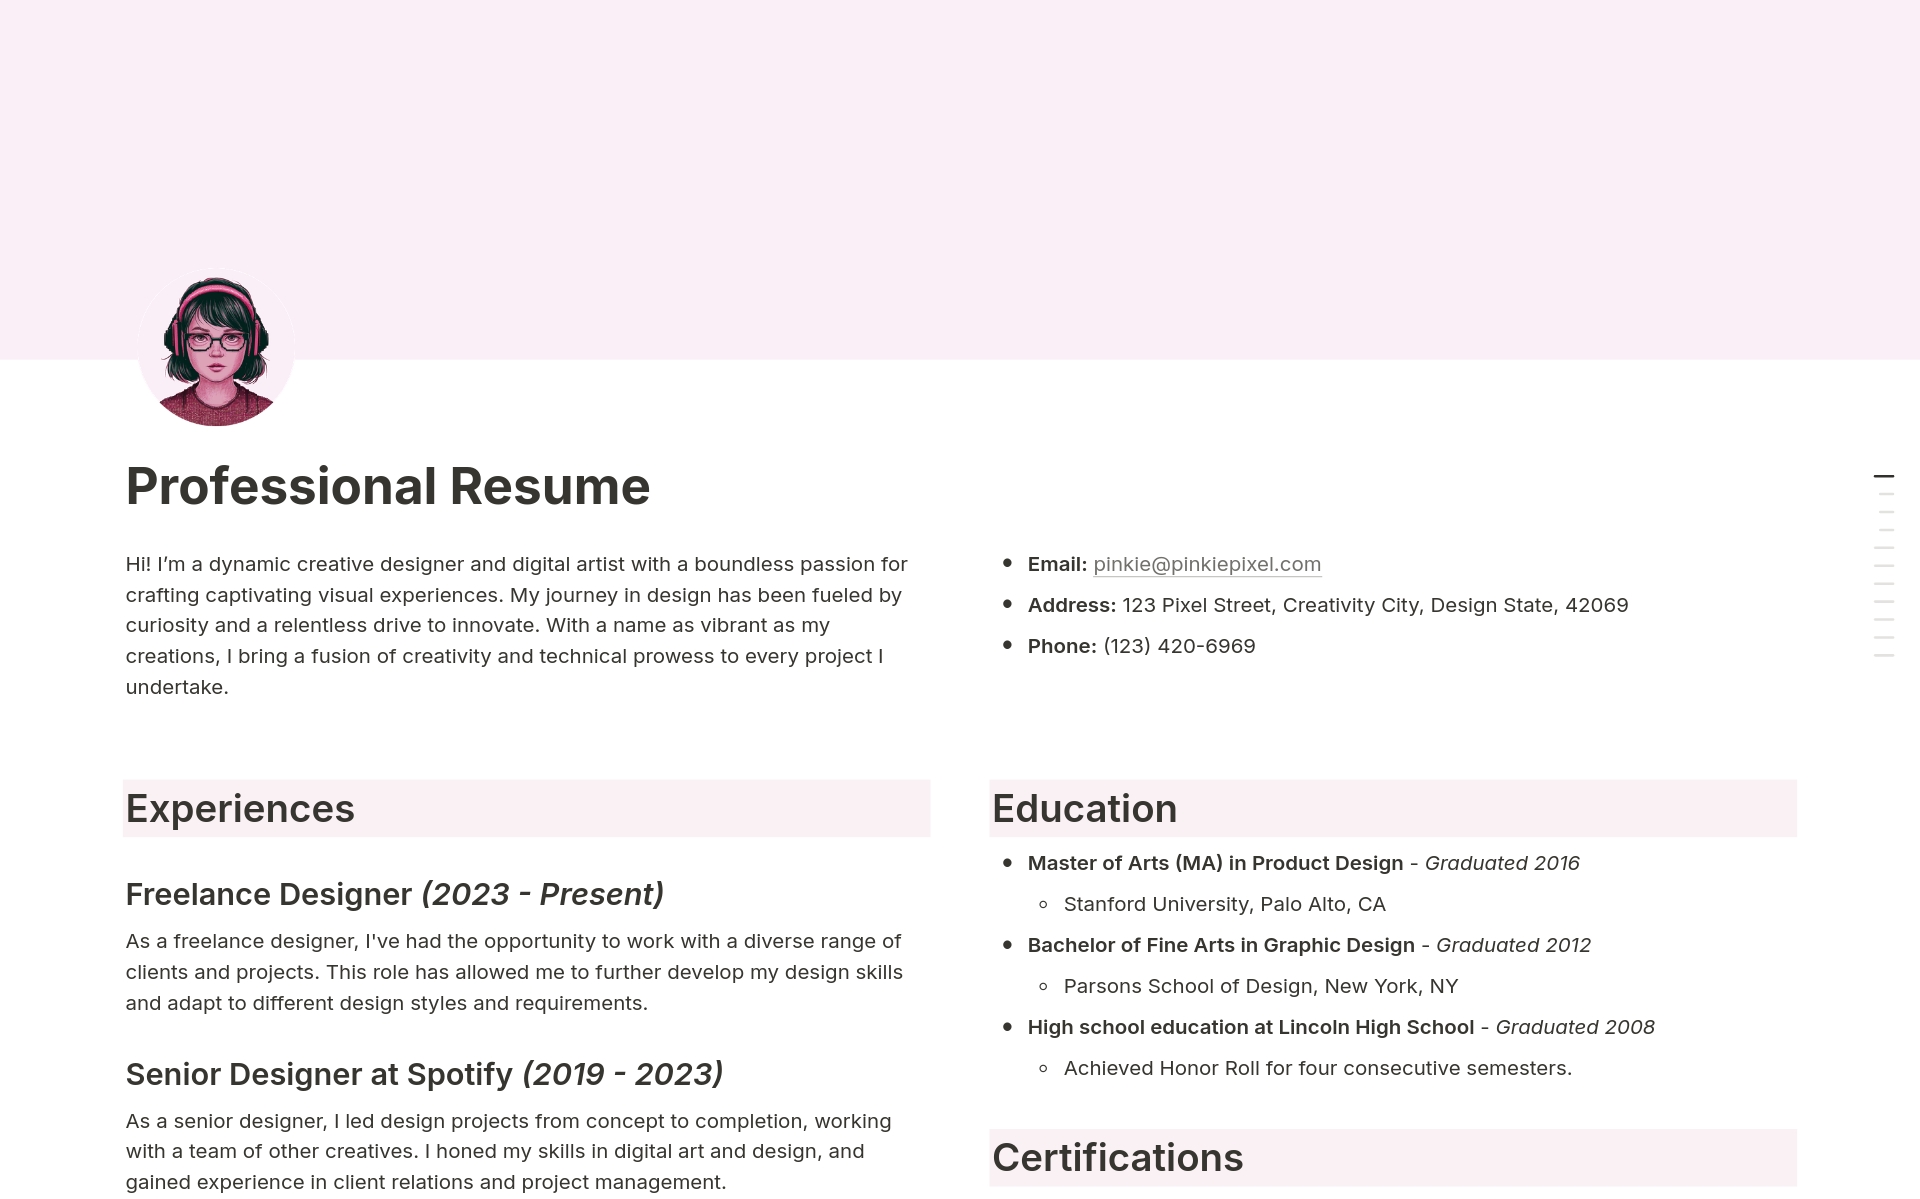 Vista previa de una plantilla para Professional Resume